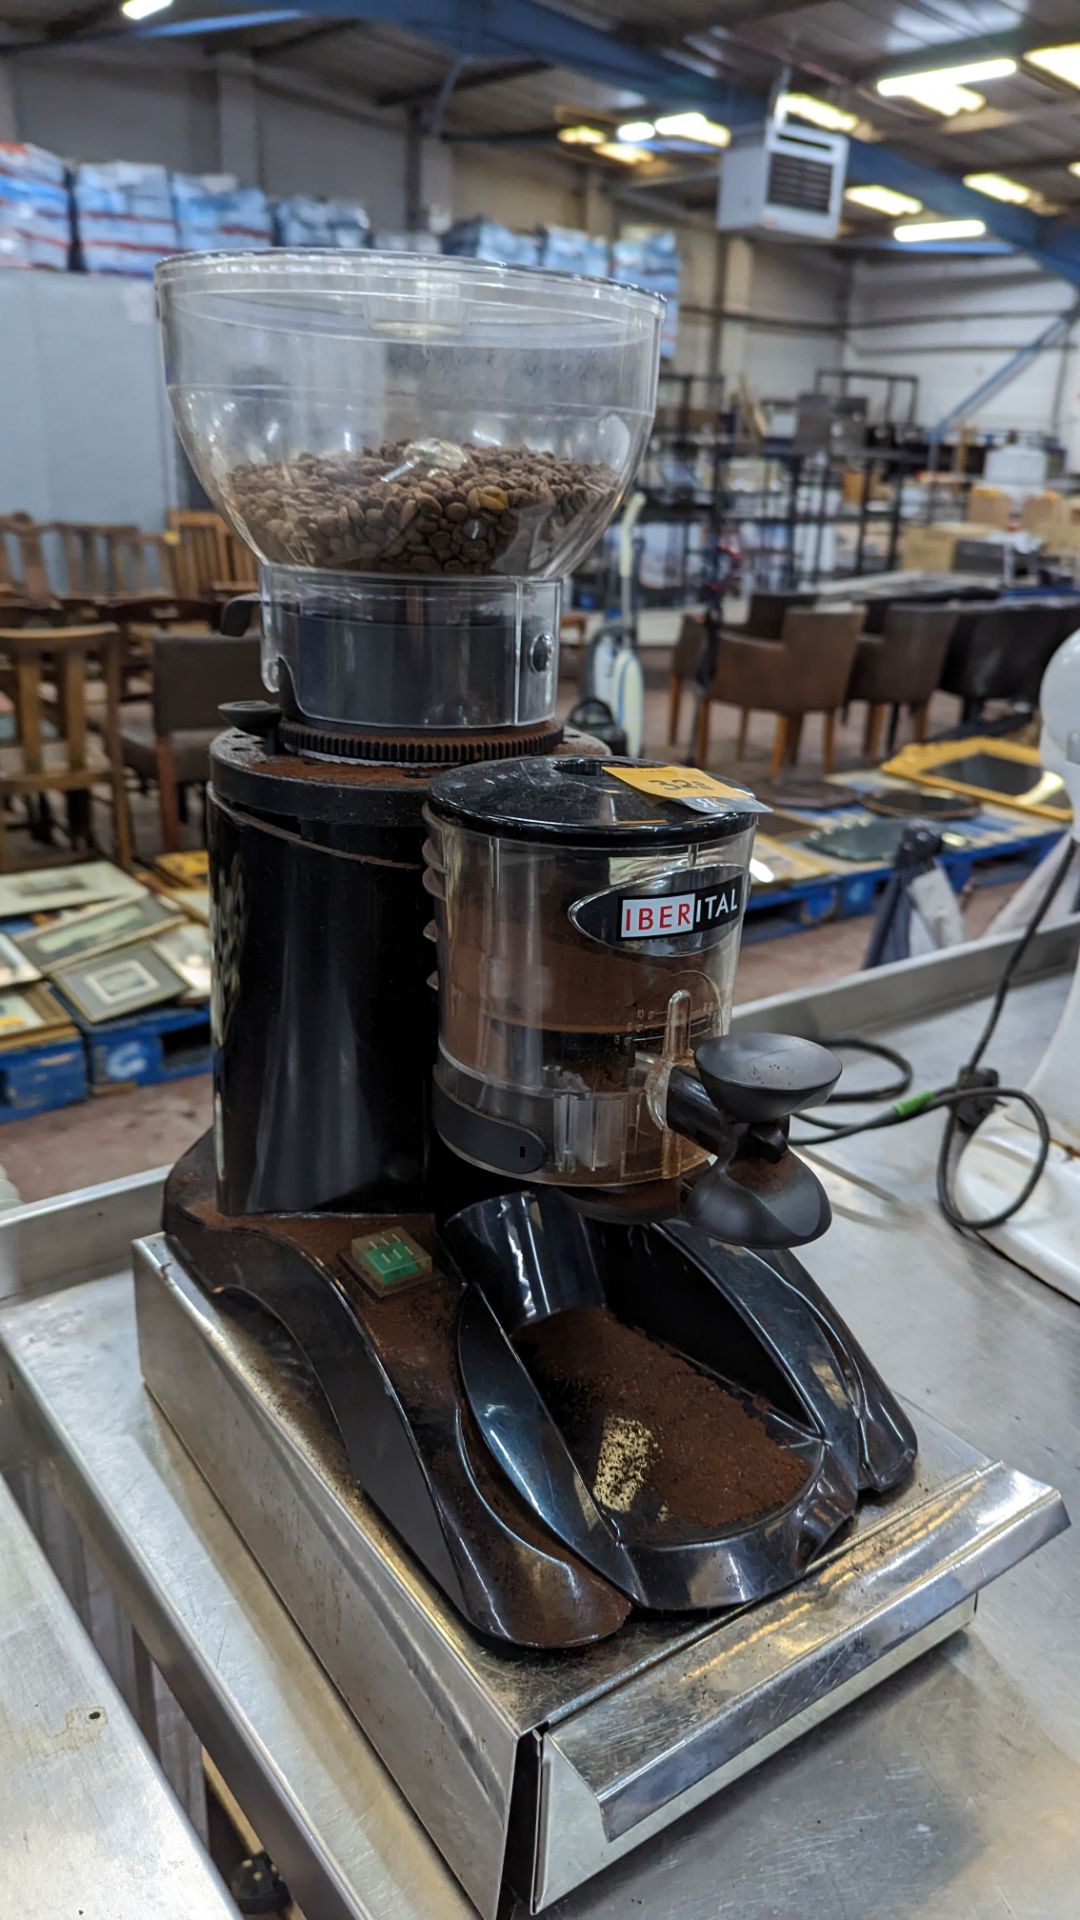 Iberital large coffee grinder plus stainless steel knock box/drawer - Image 6 of 10